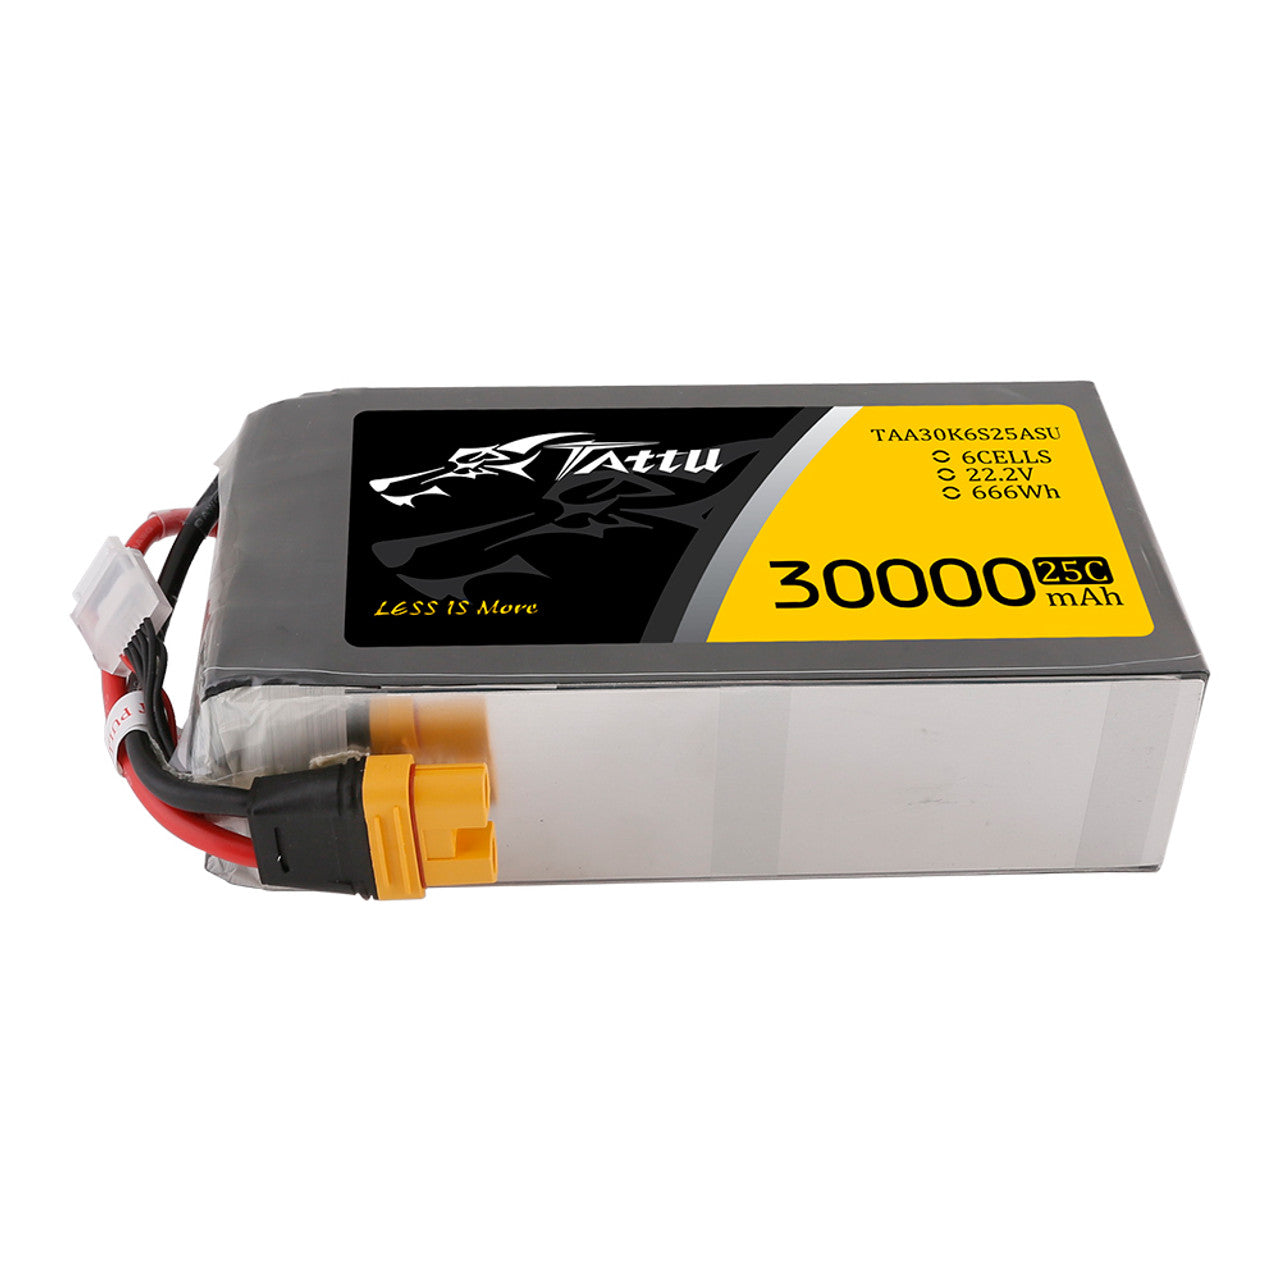 Tattu G-Tech 30000mAh 6S 22.2V 25C Lipo Battery, Tattu G-Tech 30000mAh LiPo battery pack with AS150U-F plug, 22.2V, 66Wh capacity.